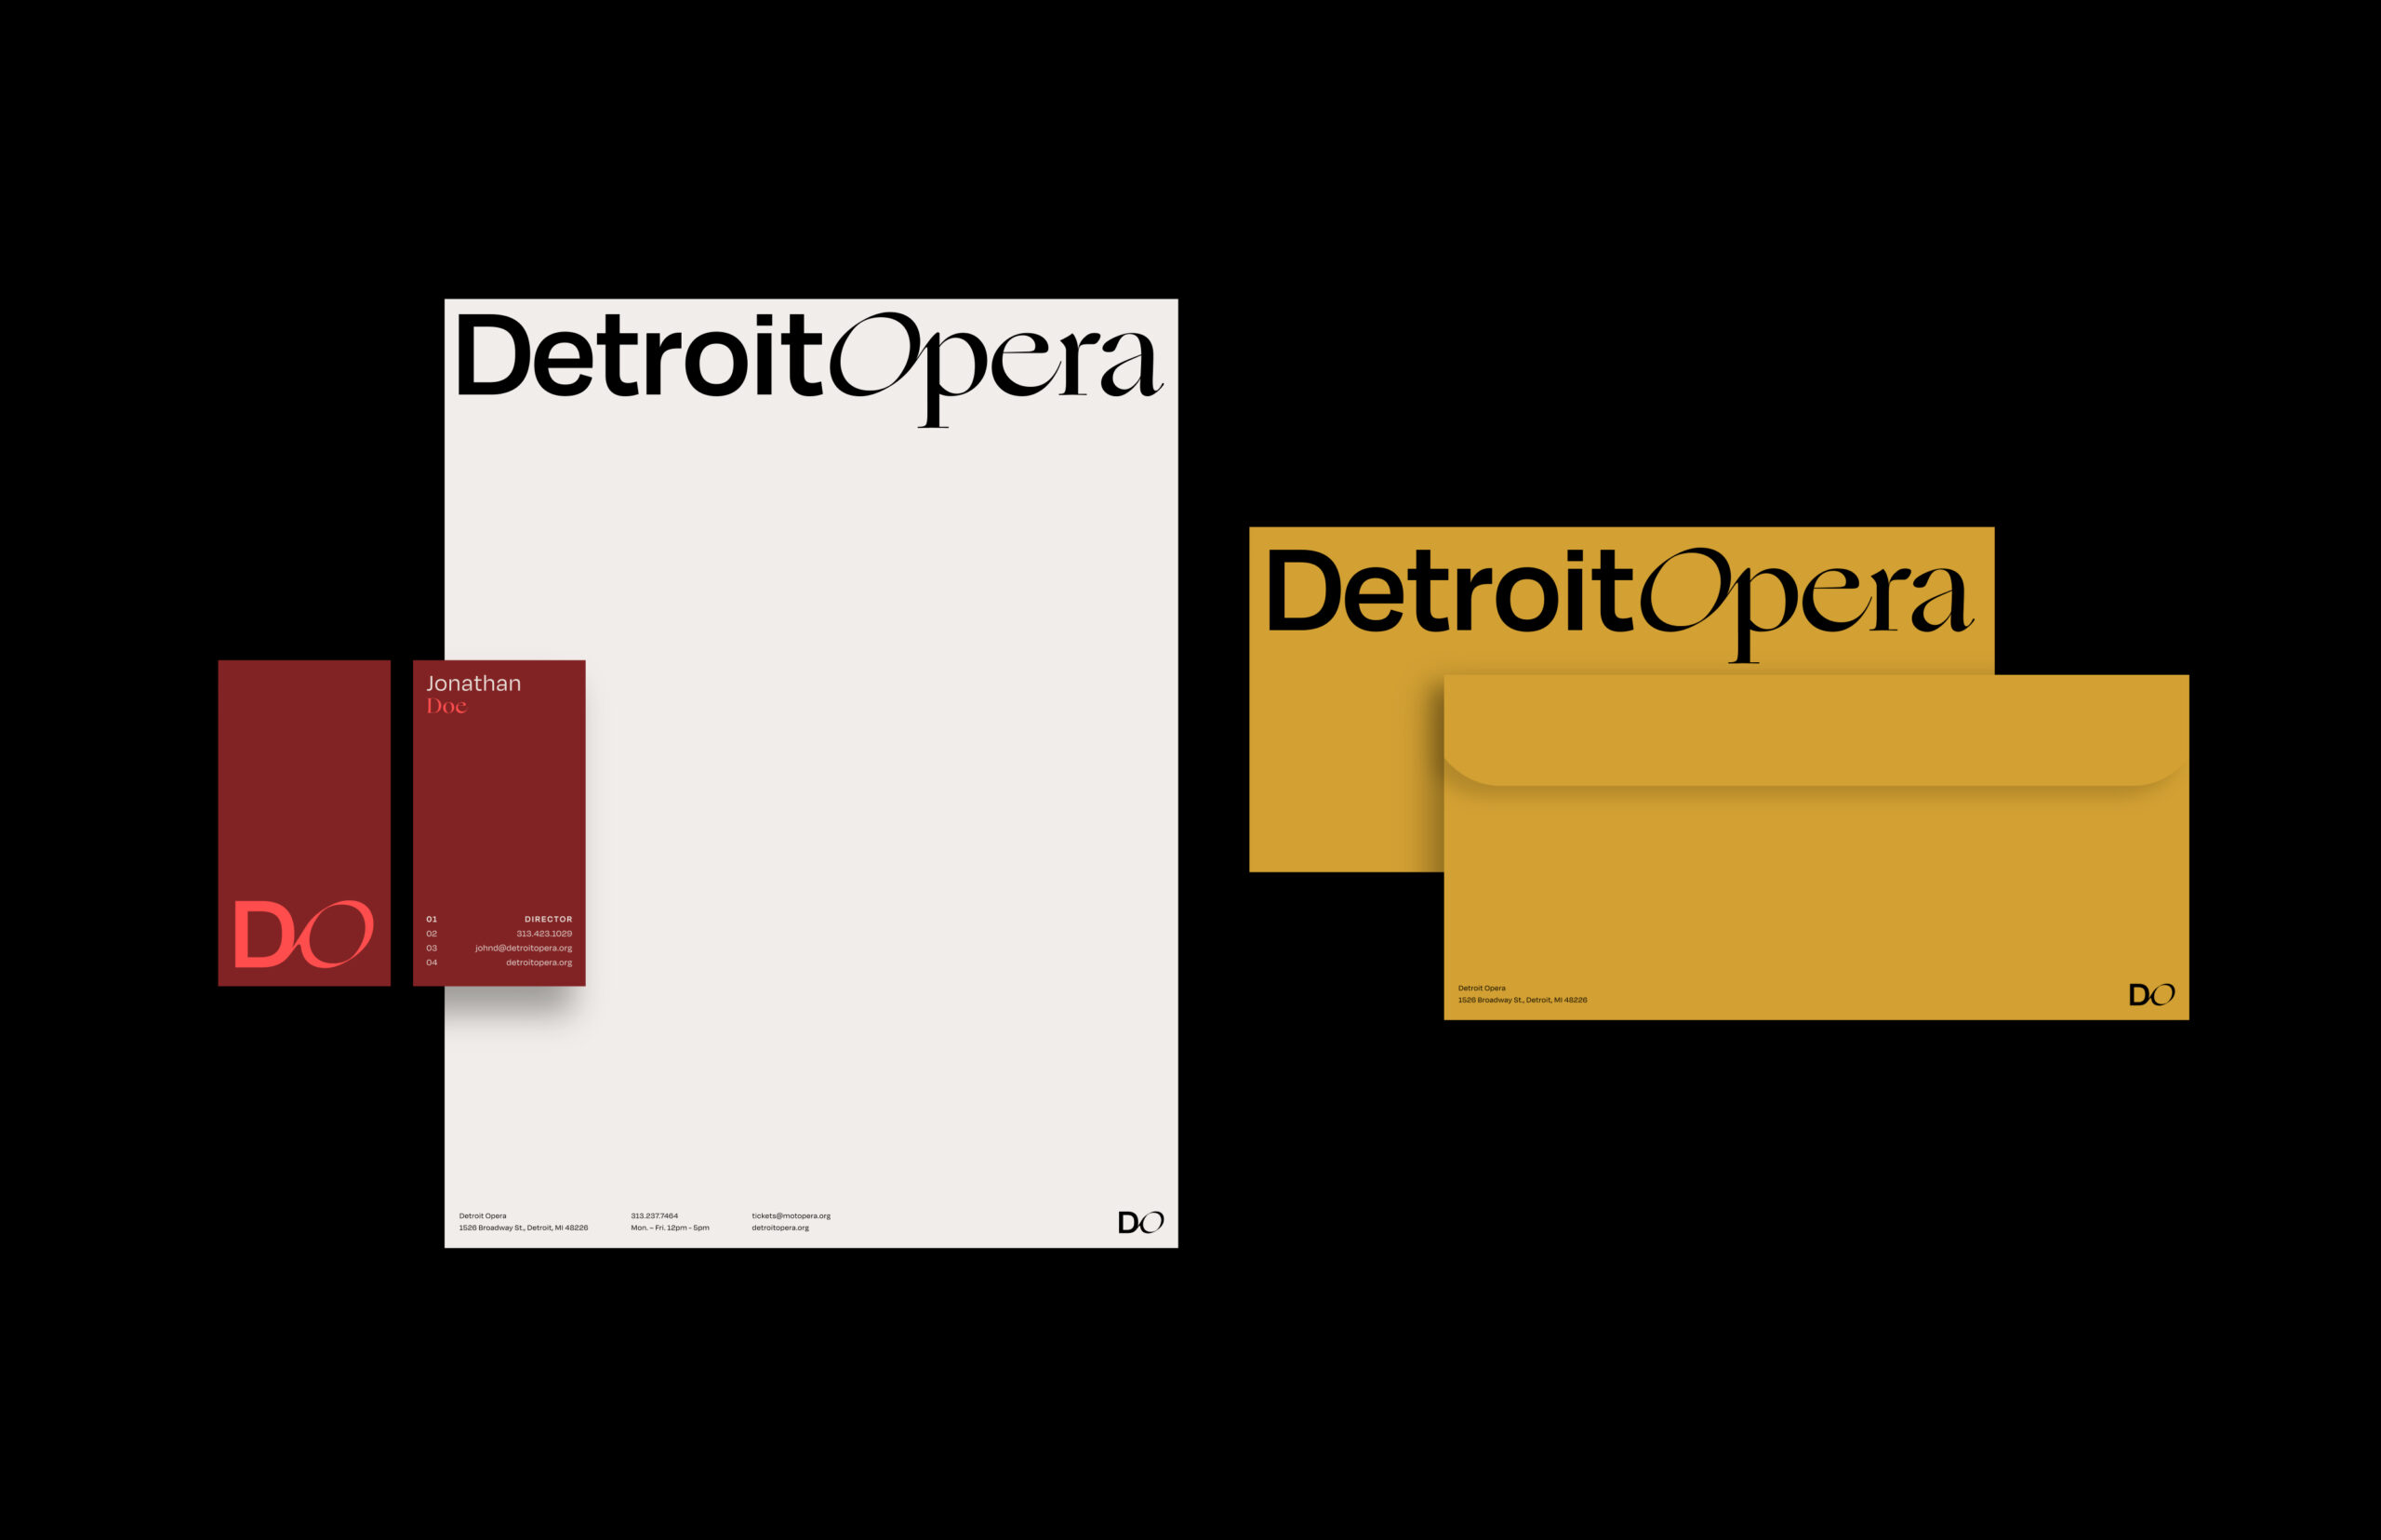 01-DetroitOpera-Img2b